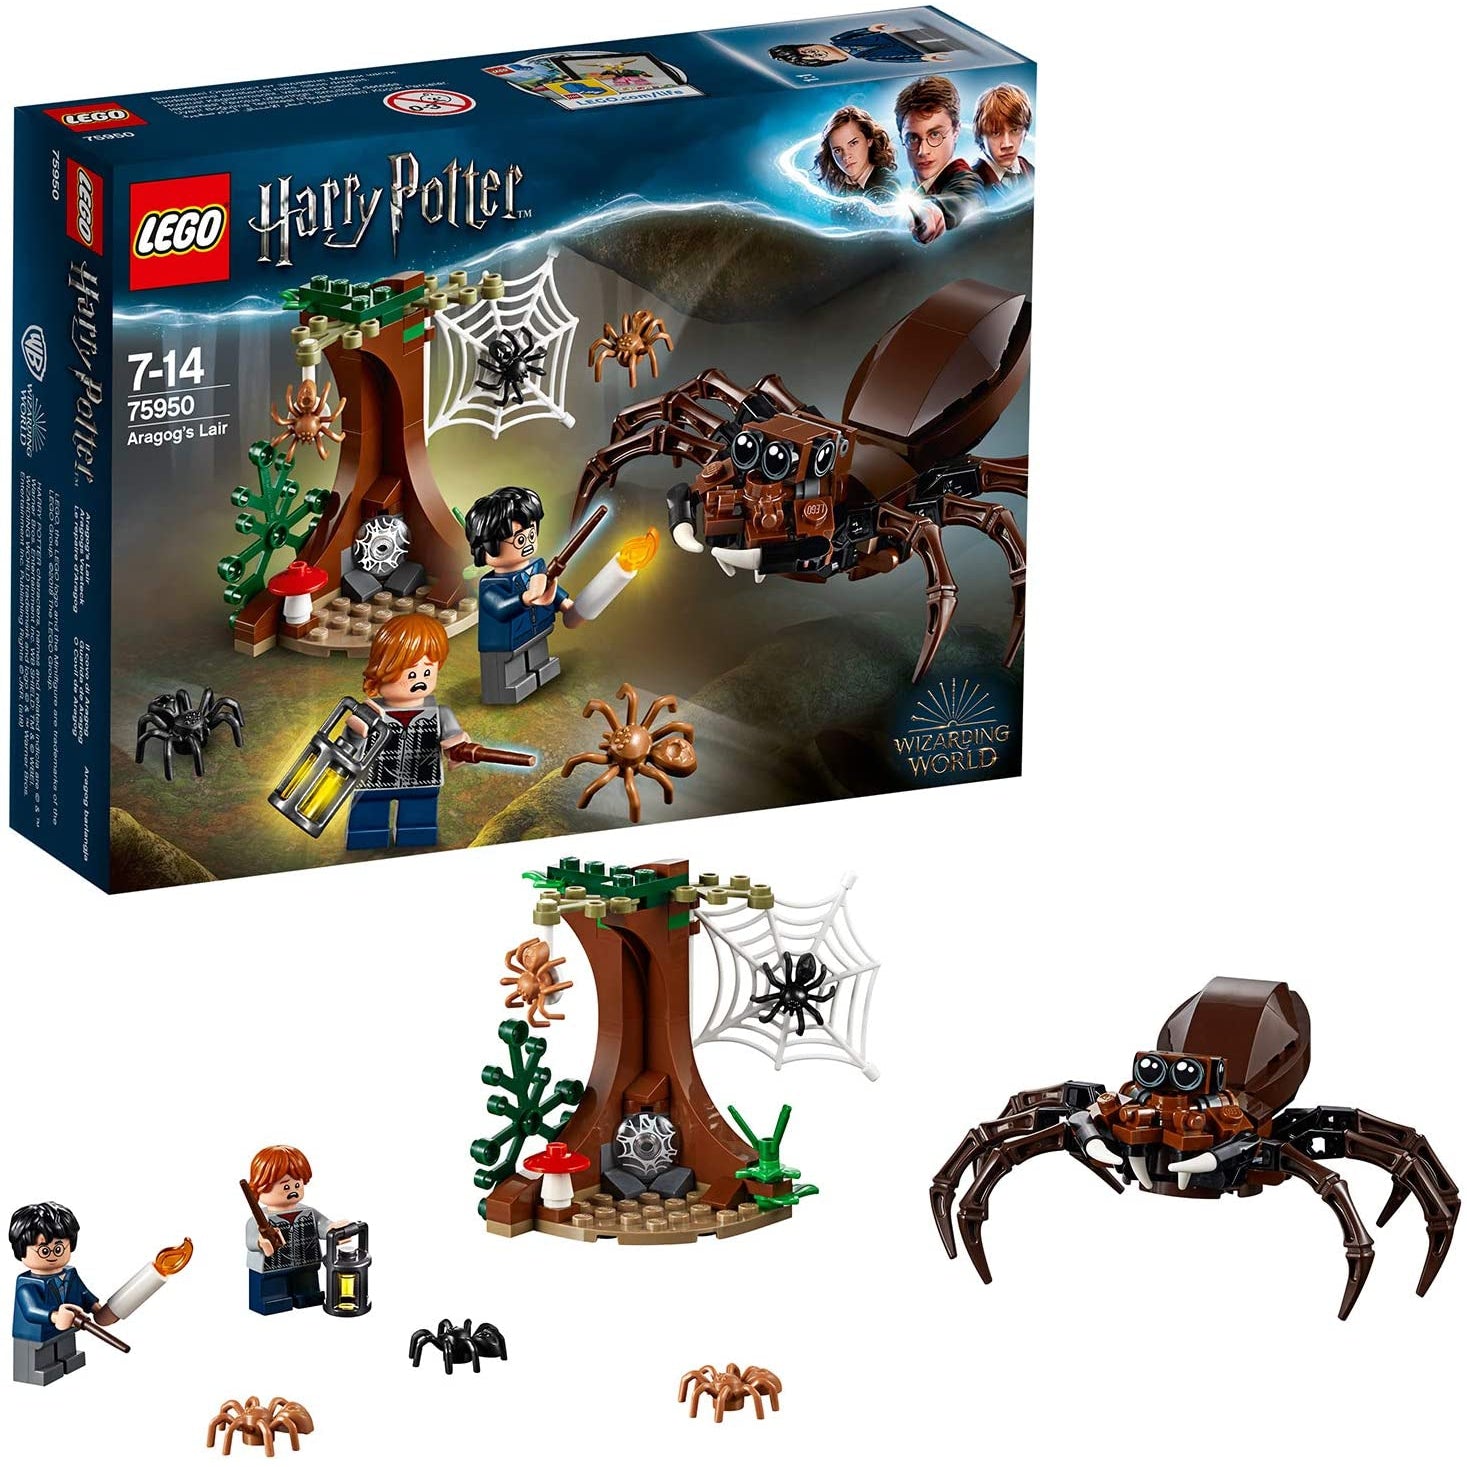 LEGO 75950 Harry Potter Aragog's Lair